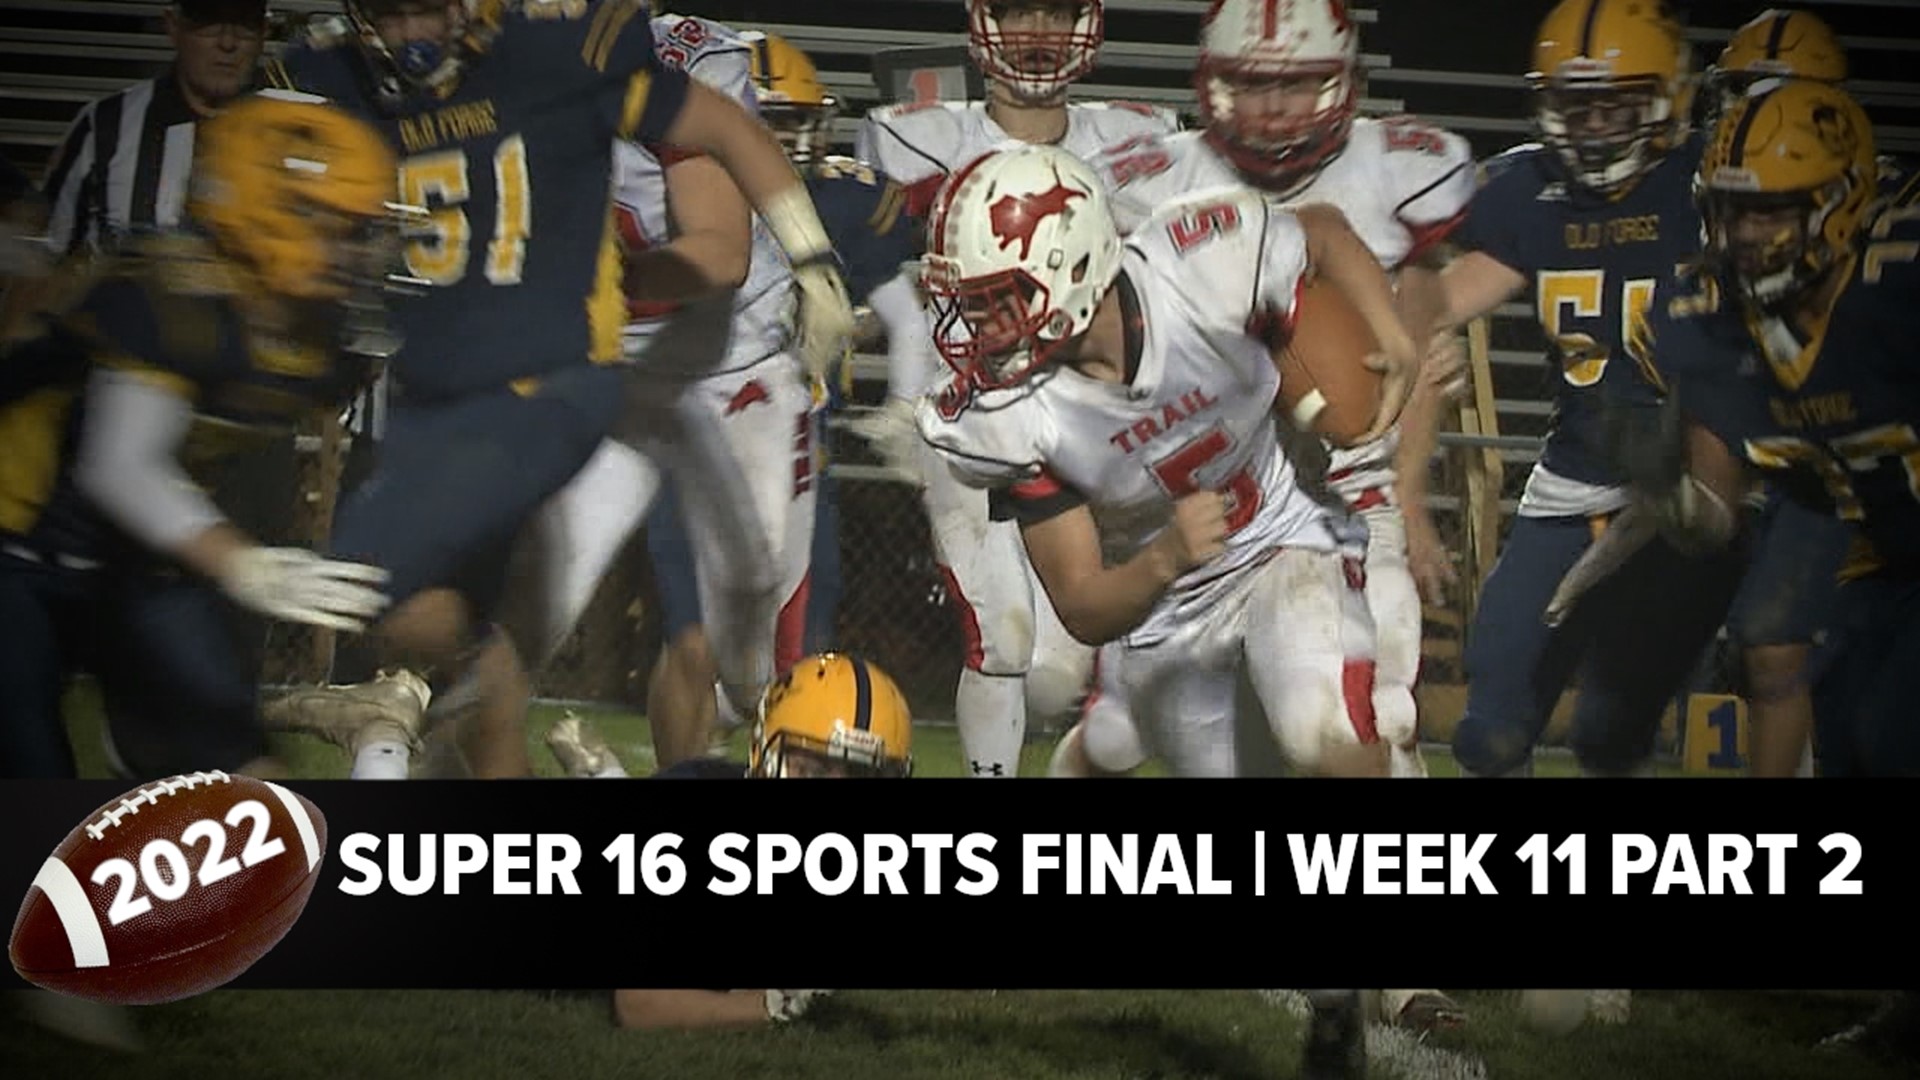 Super 16 Sports Final Week 11 Part 2 wnep